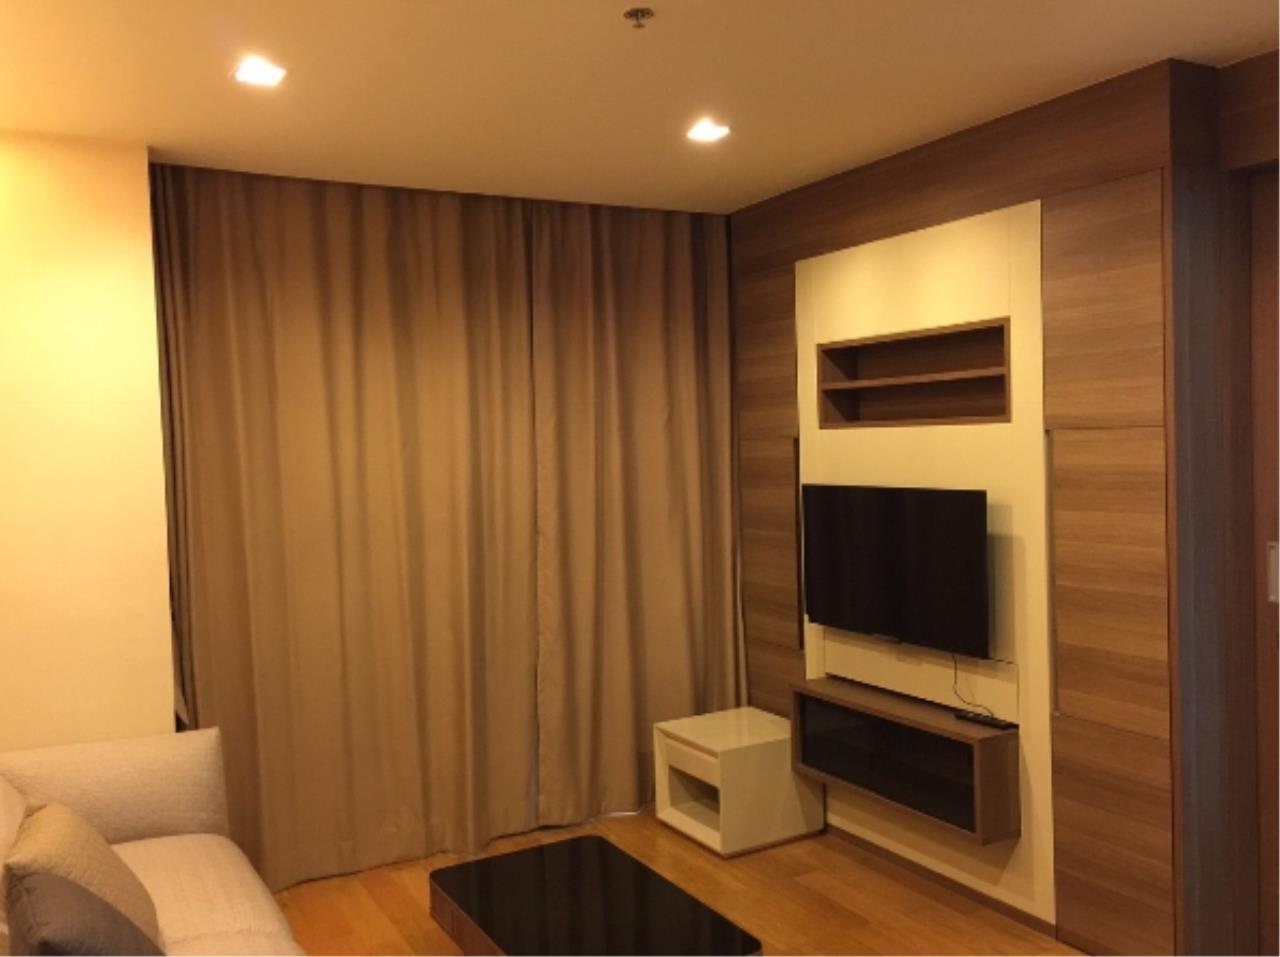 RE/MAX Properties Agency's 1 Bedroom for Rent ADDRESS SATHORN 3